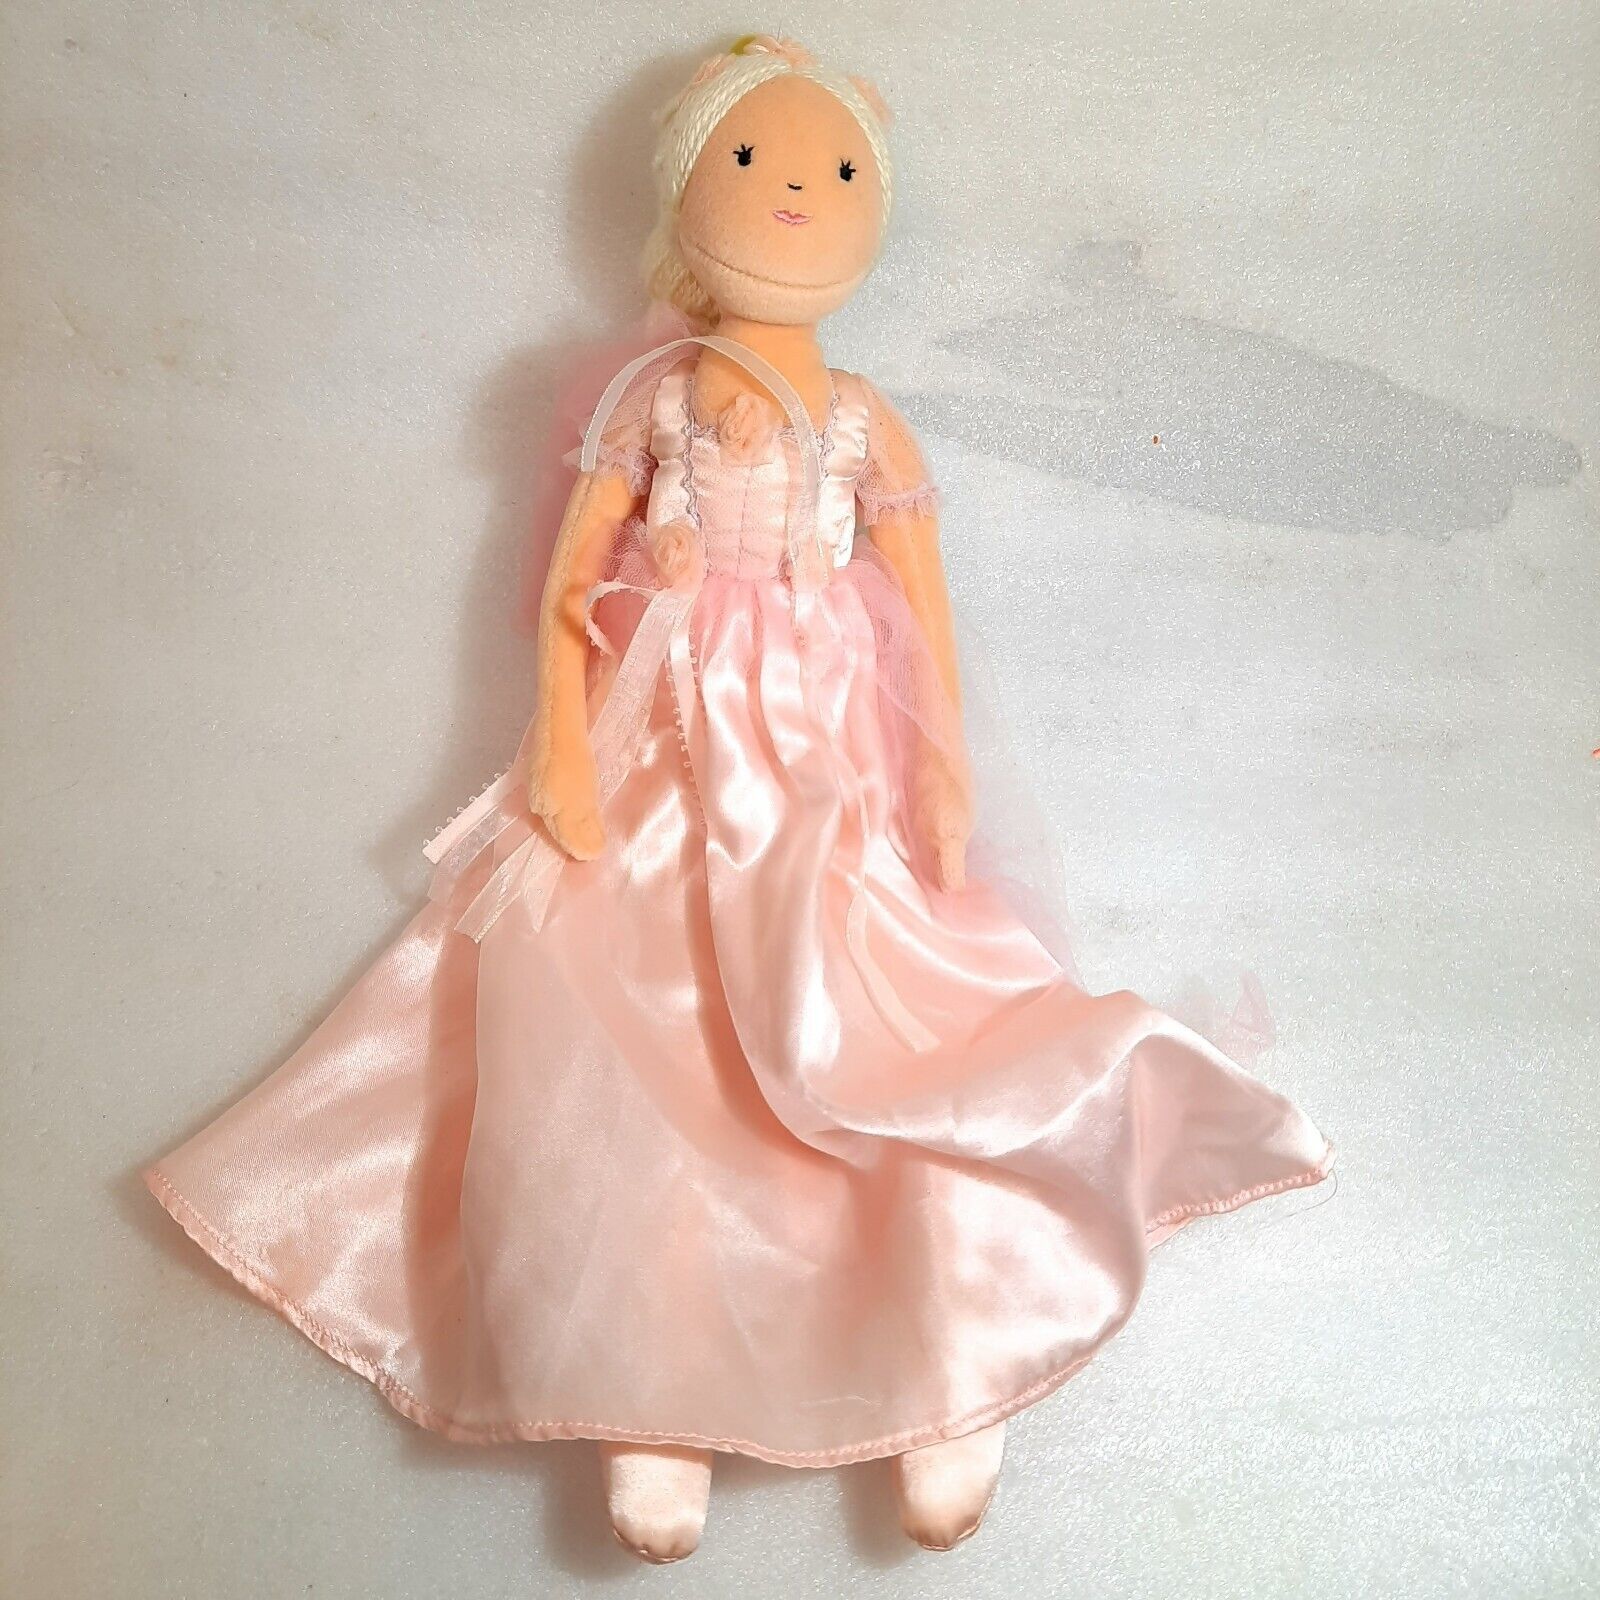 Target Play Wonder Blonde Princess Doll plush Yarn Hair Pink Dress ballerina - $18.00